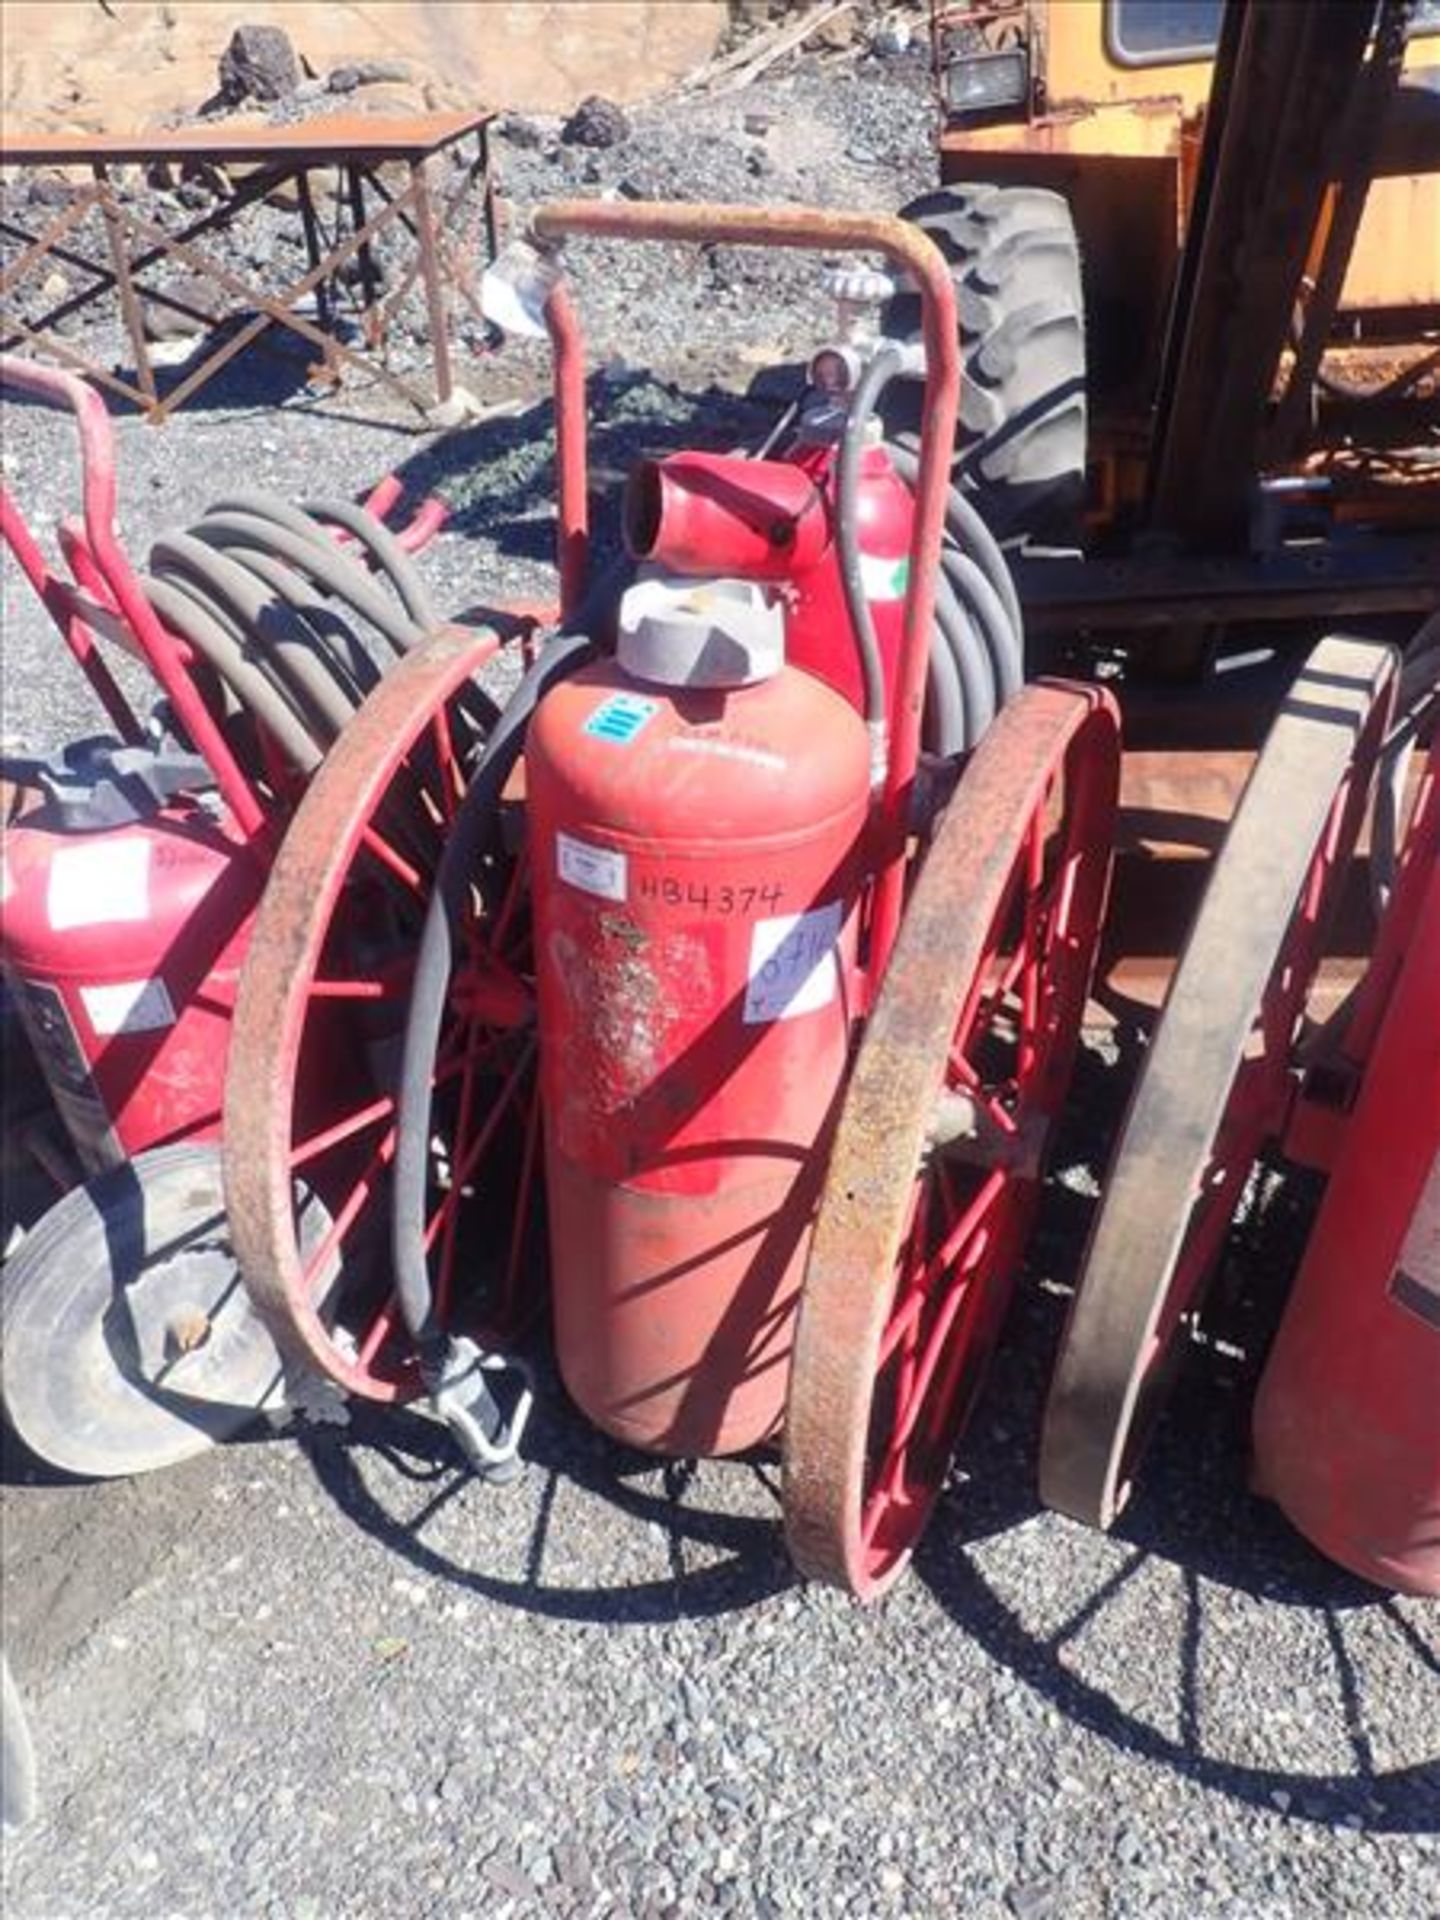 Ansul Red Line fire extinguisher w/ cart (Tag 8716 Loc Bones Yard)